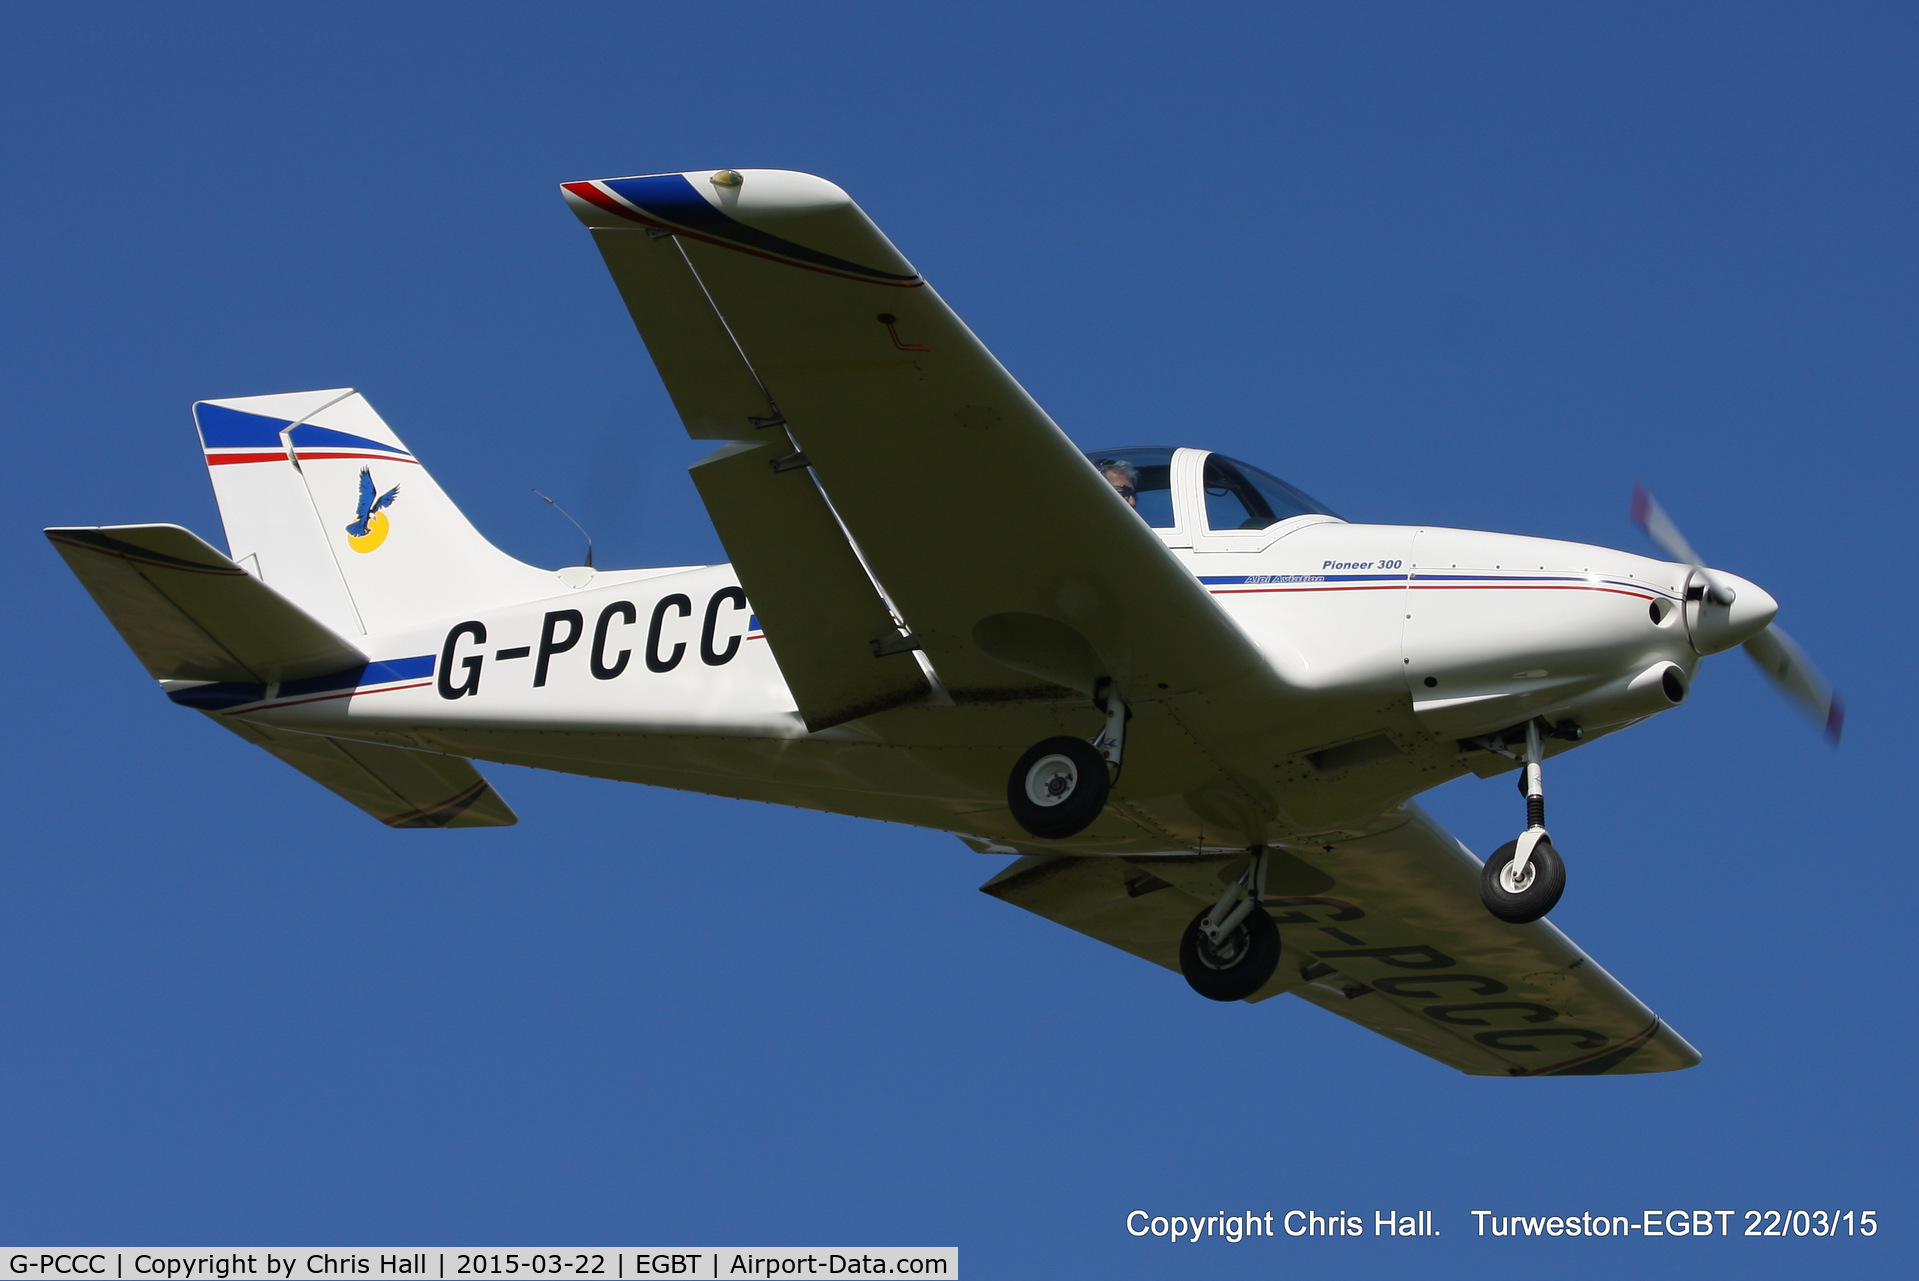 G-PCCC, 2004 Alpi Aviation Pioneer 300 C/N PFA 330-14220, at the Vintage Aircraft Club spring rally